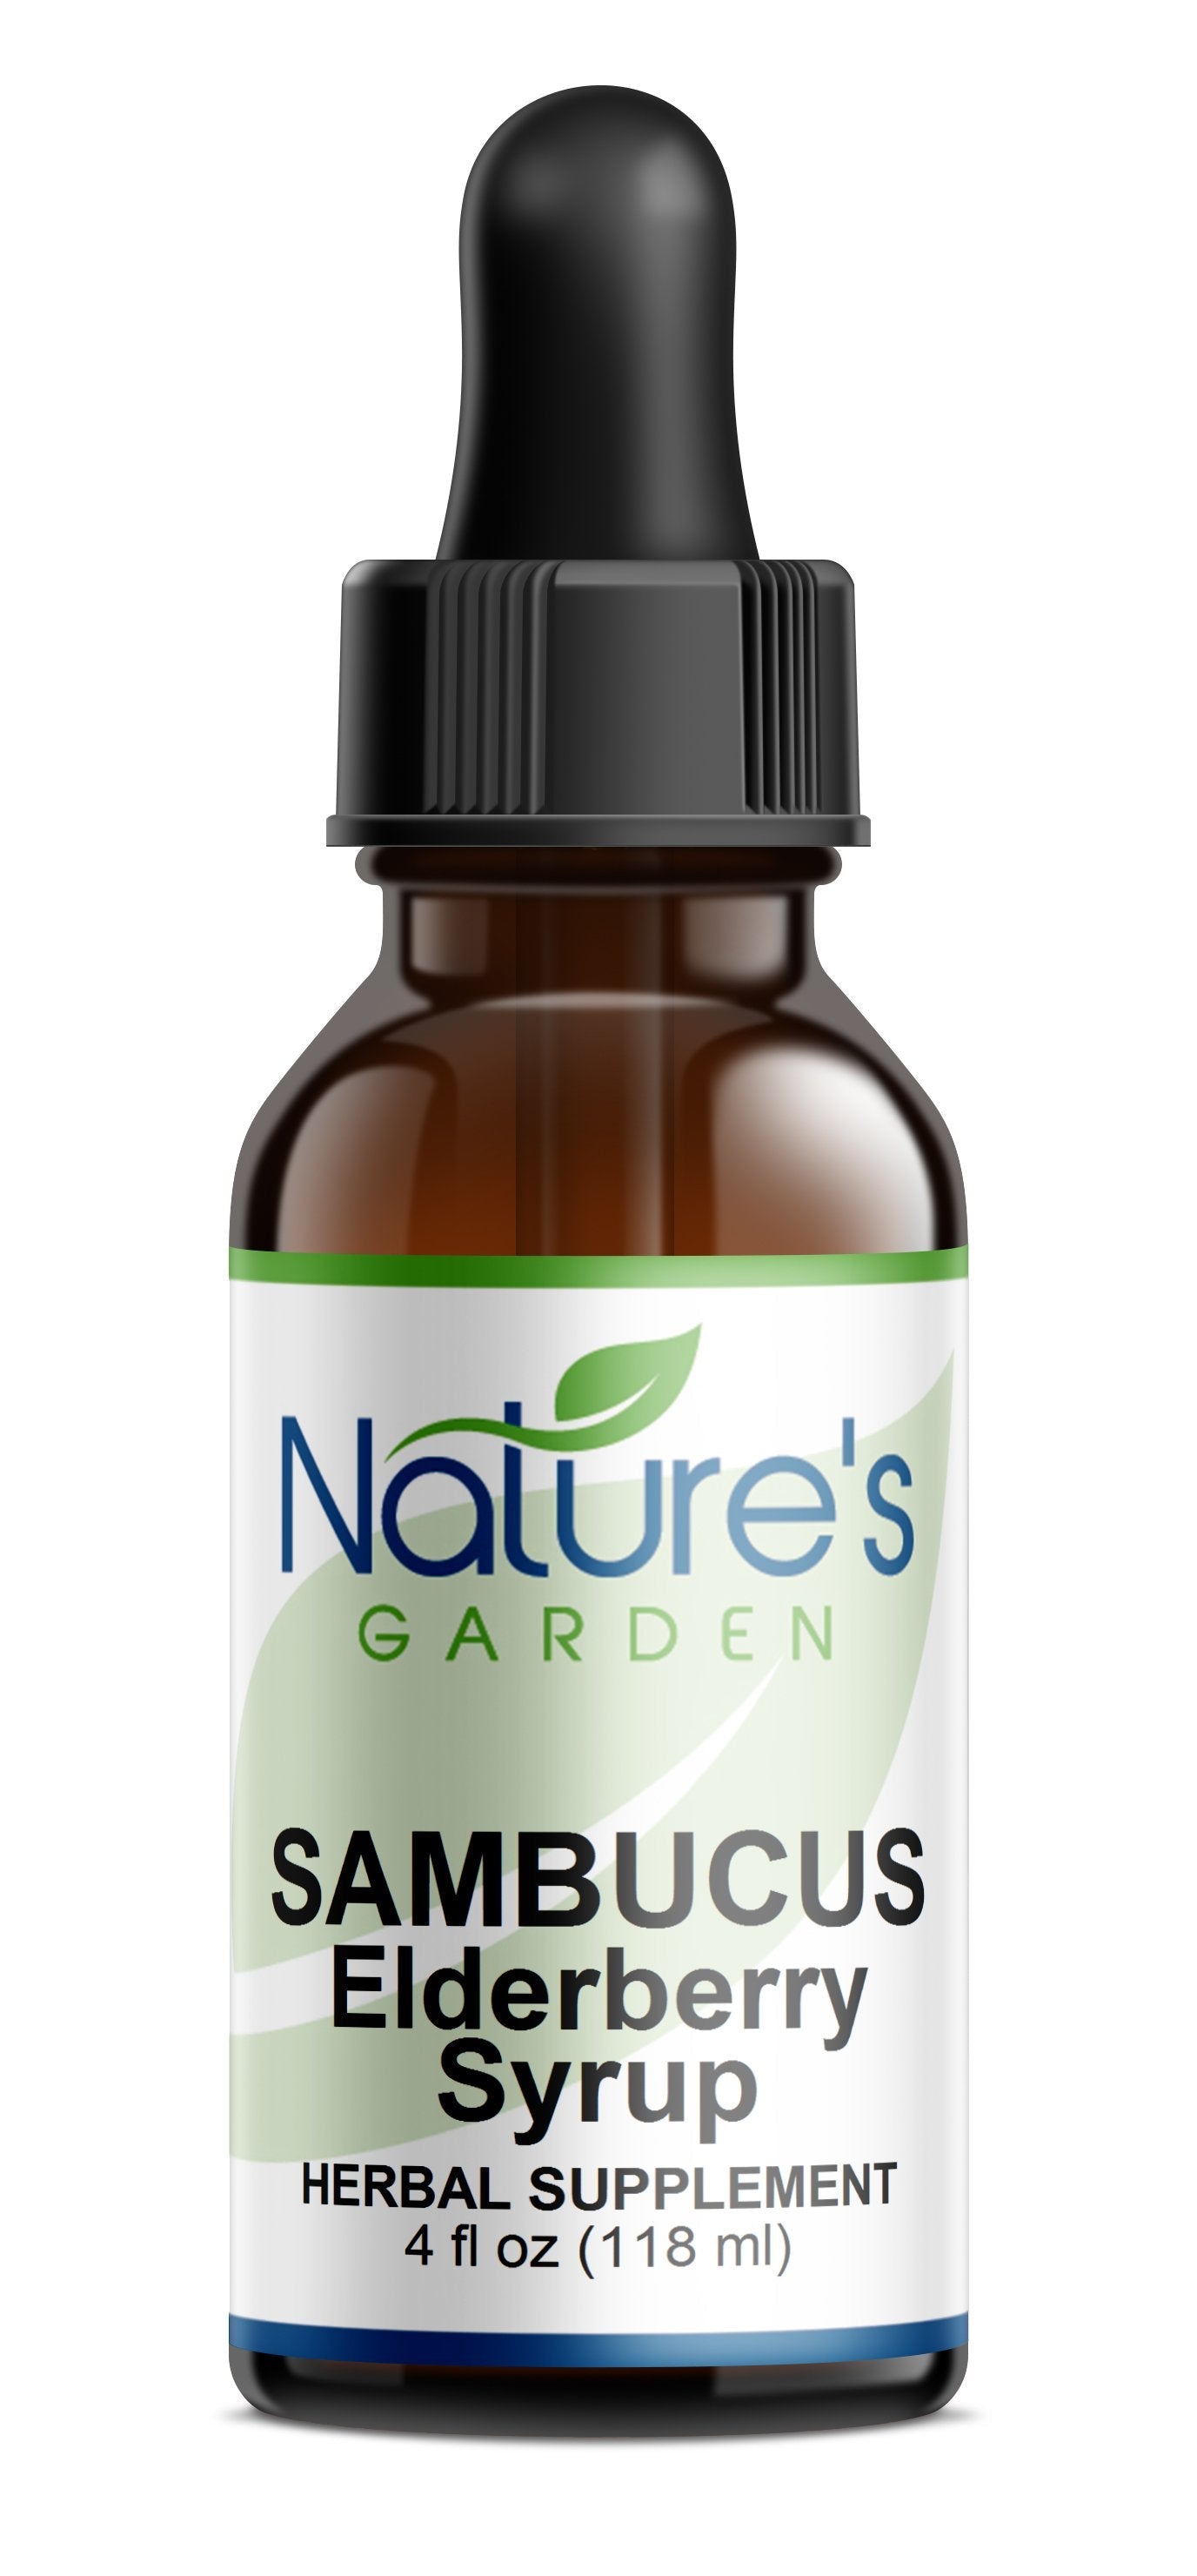 SAMBUCUS ELDERBERRY SYRUP - 4 oz Liquid Herbal Formula IMAGE PROBLEM